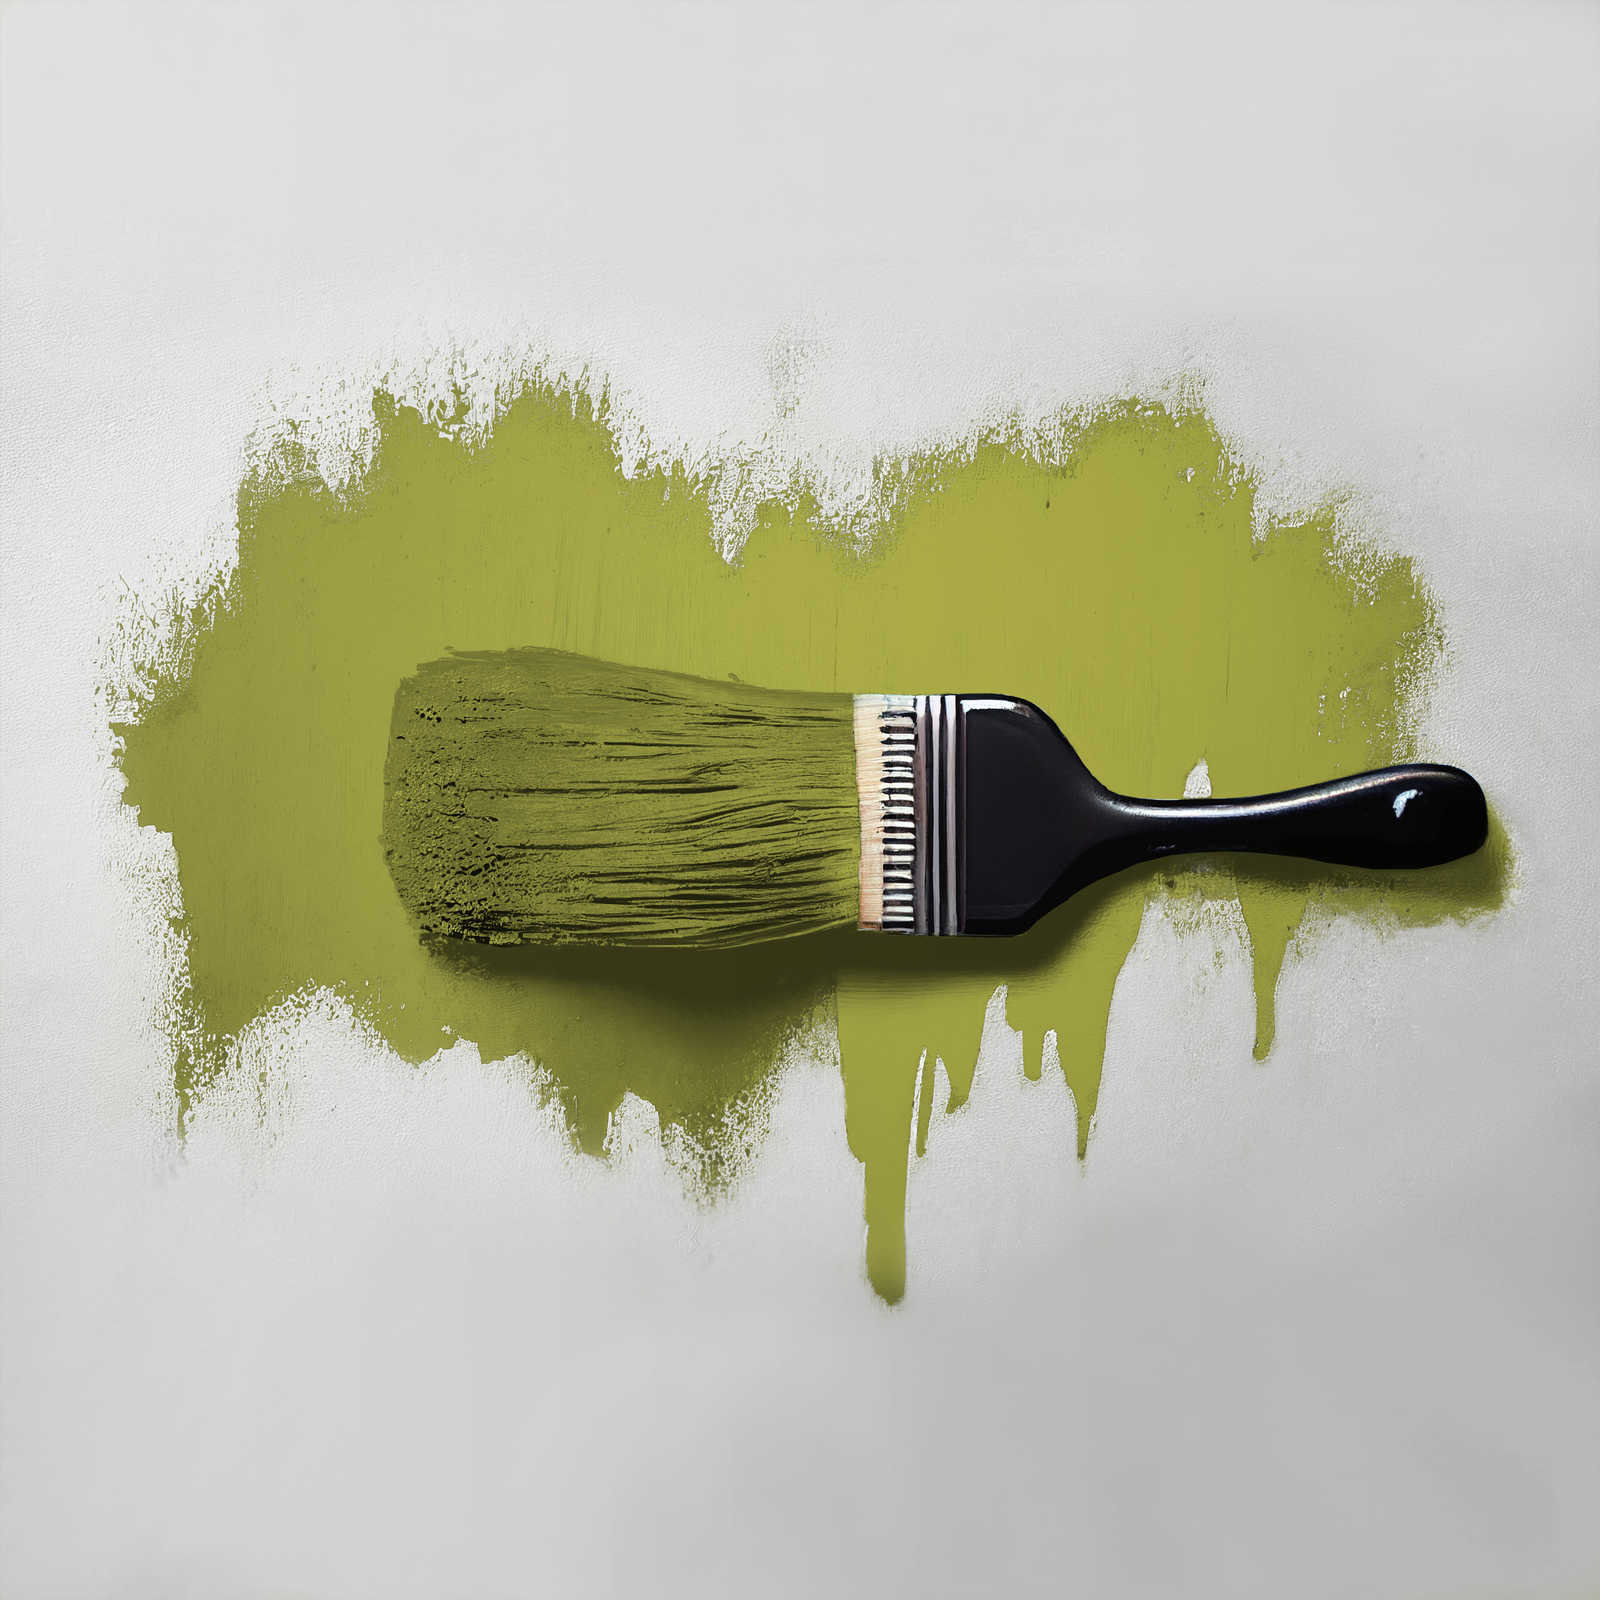             Peinture murale TCK4009 »Kitchy Kiwi« en vert jaune vif – 5,0 litres
        